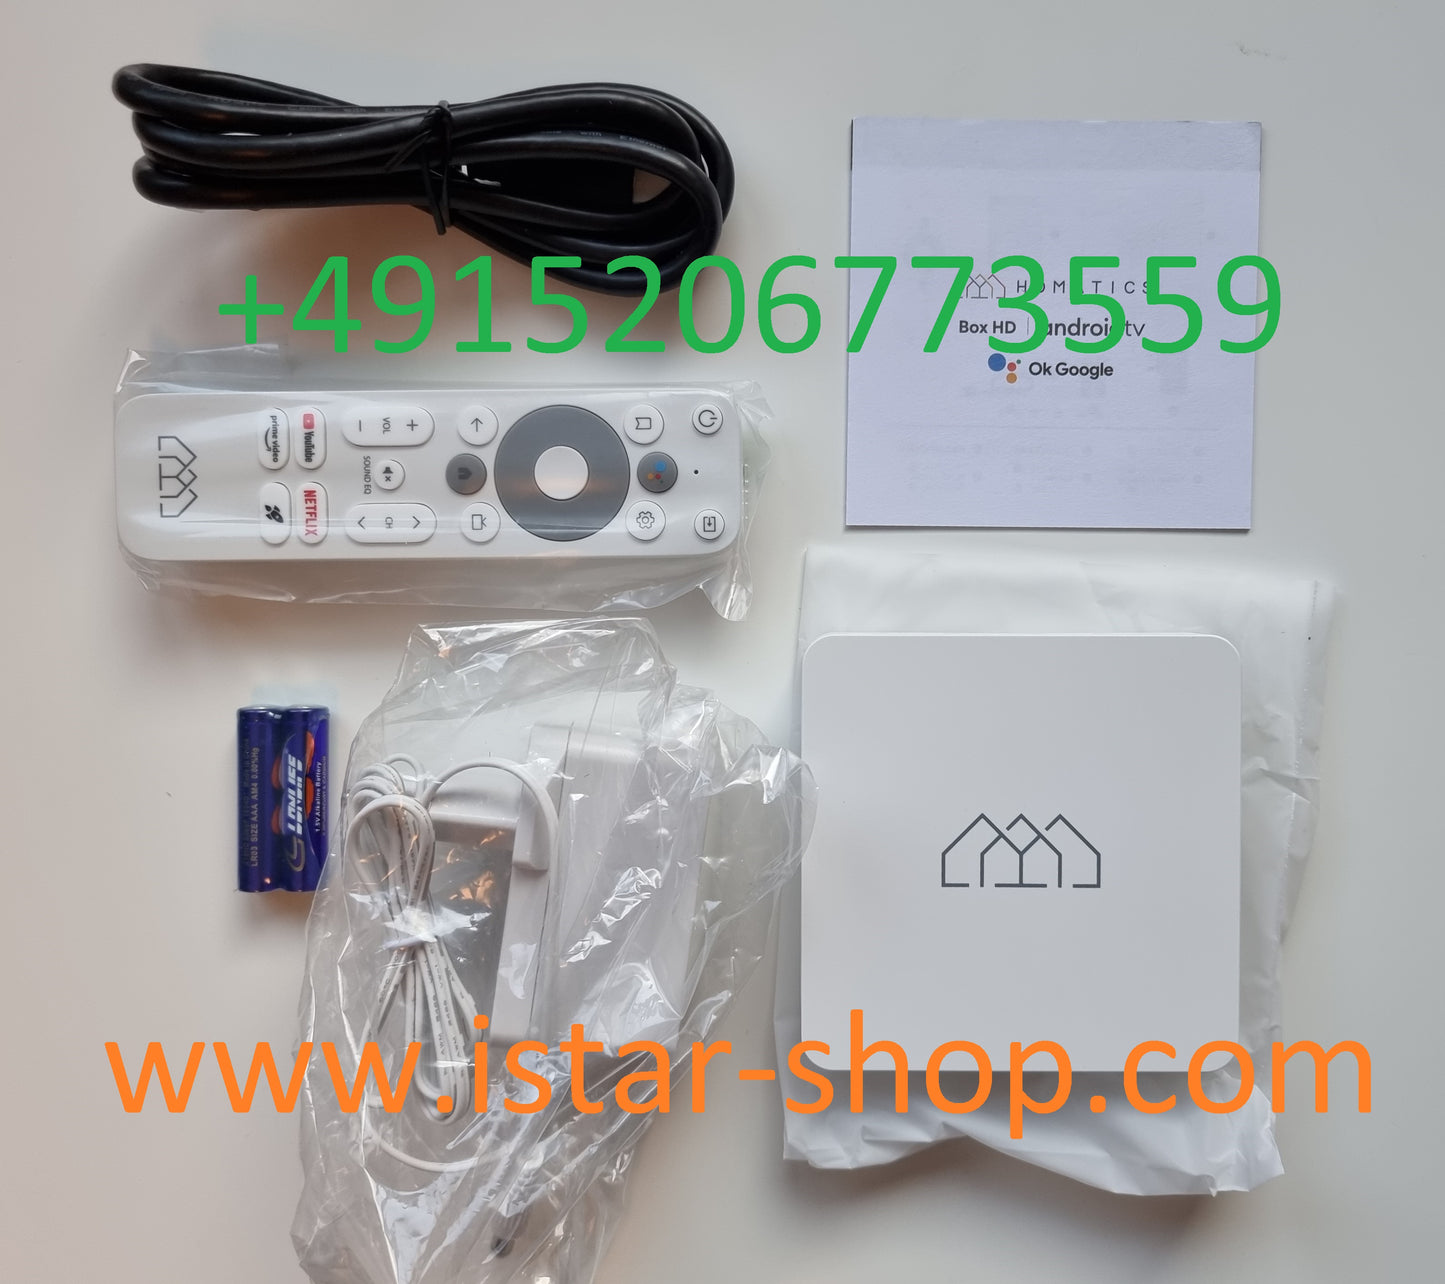 iStar Q Box Android TVBOX Receiver + OnlineTV Online TV Digital Box zina tv istar qbox zinatv HD FHD satellit satellite